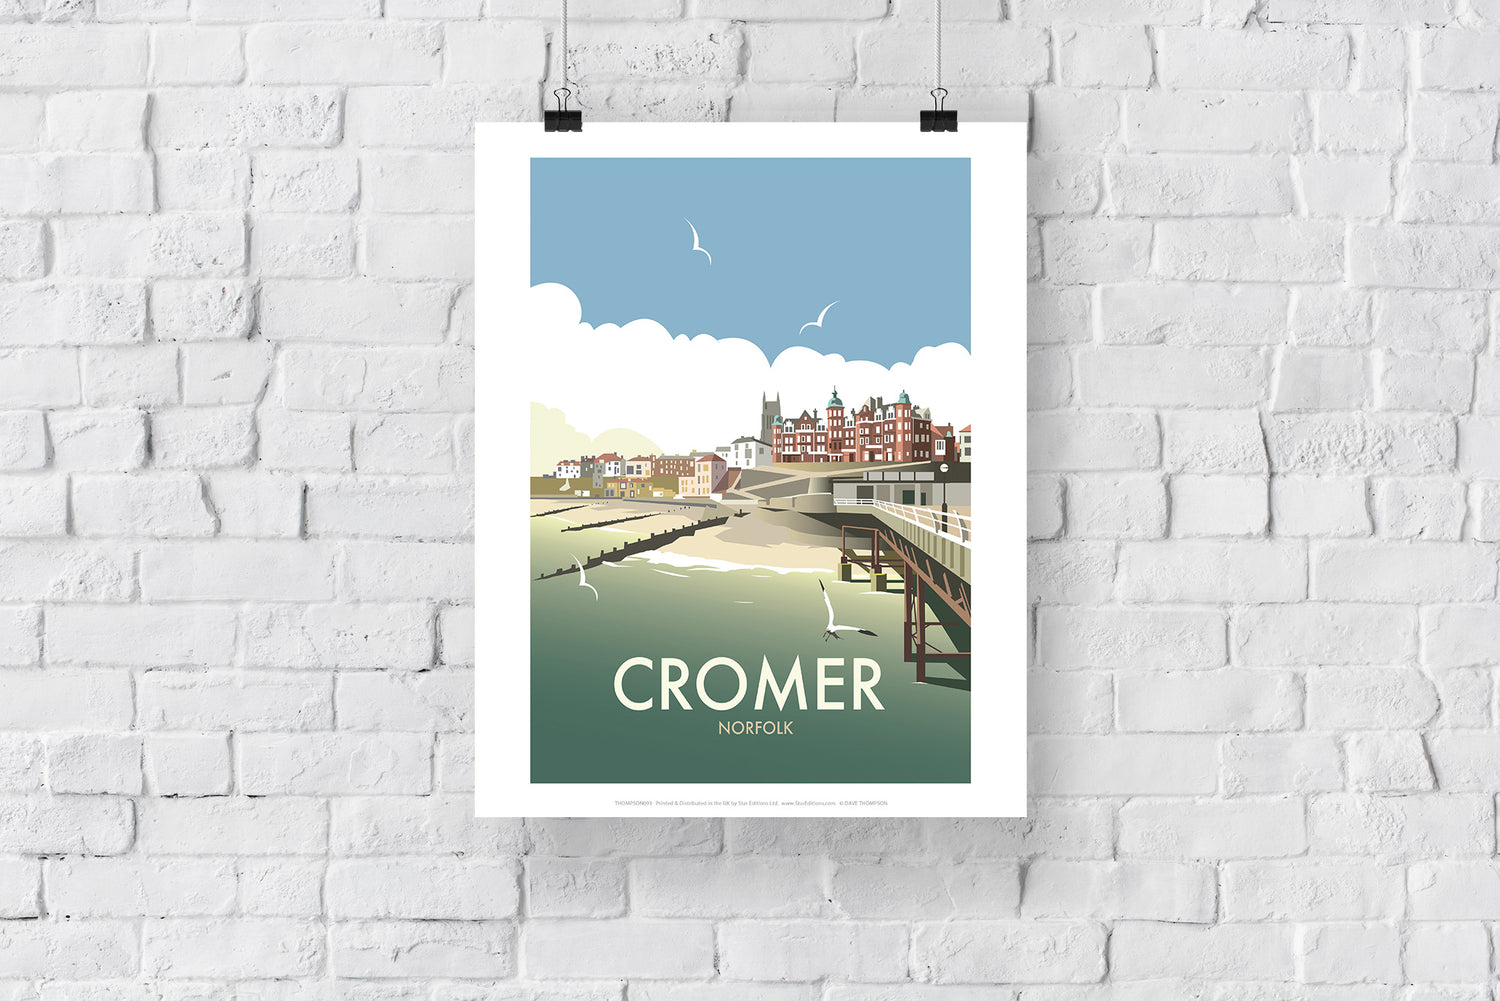 Cromer, Norfolk - Art Print